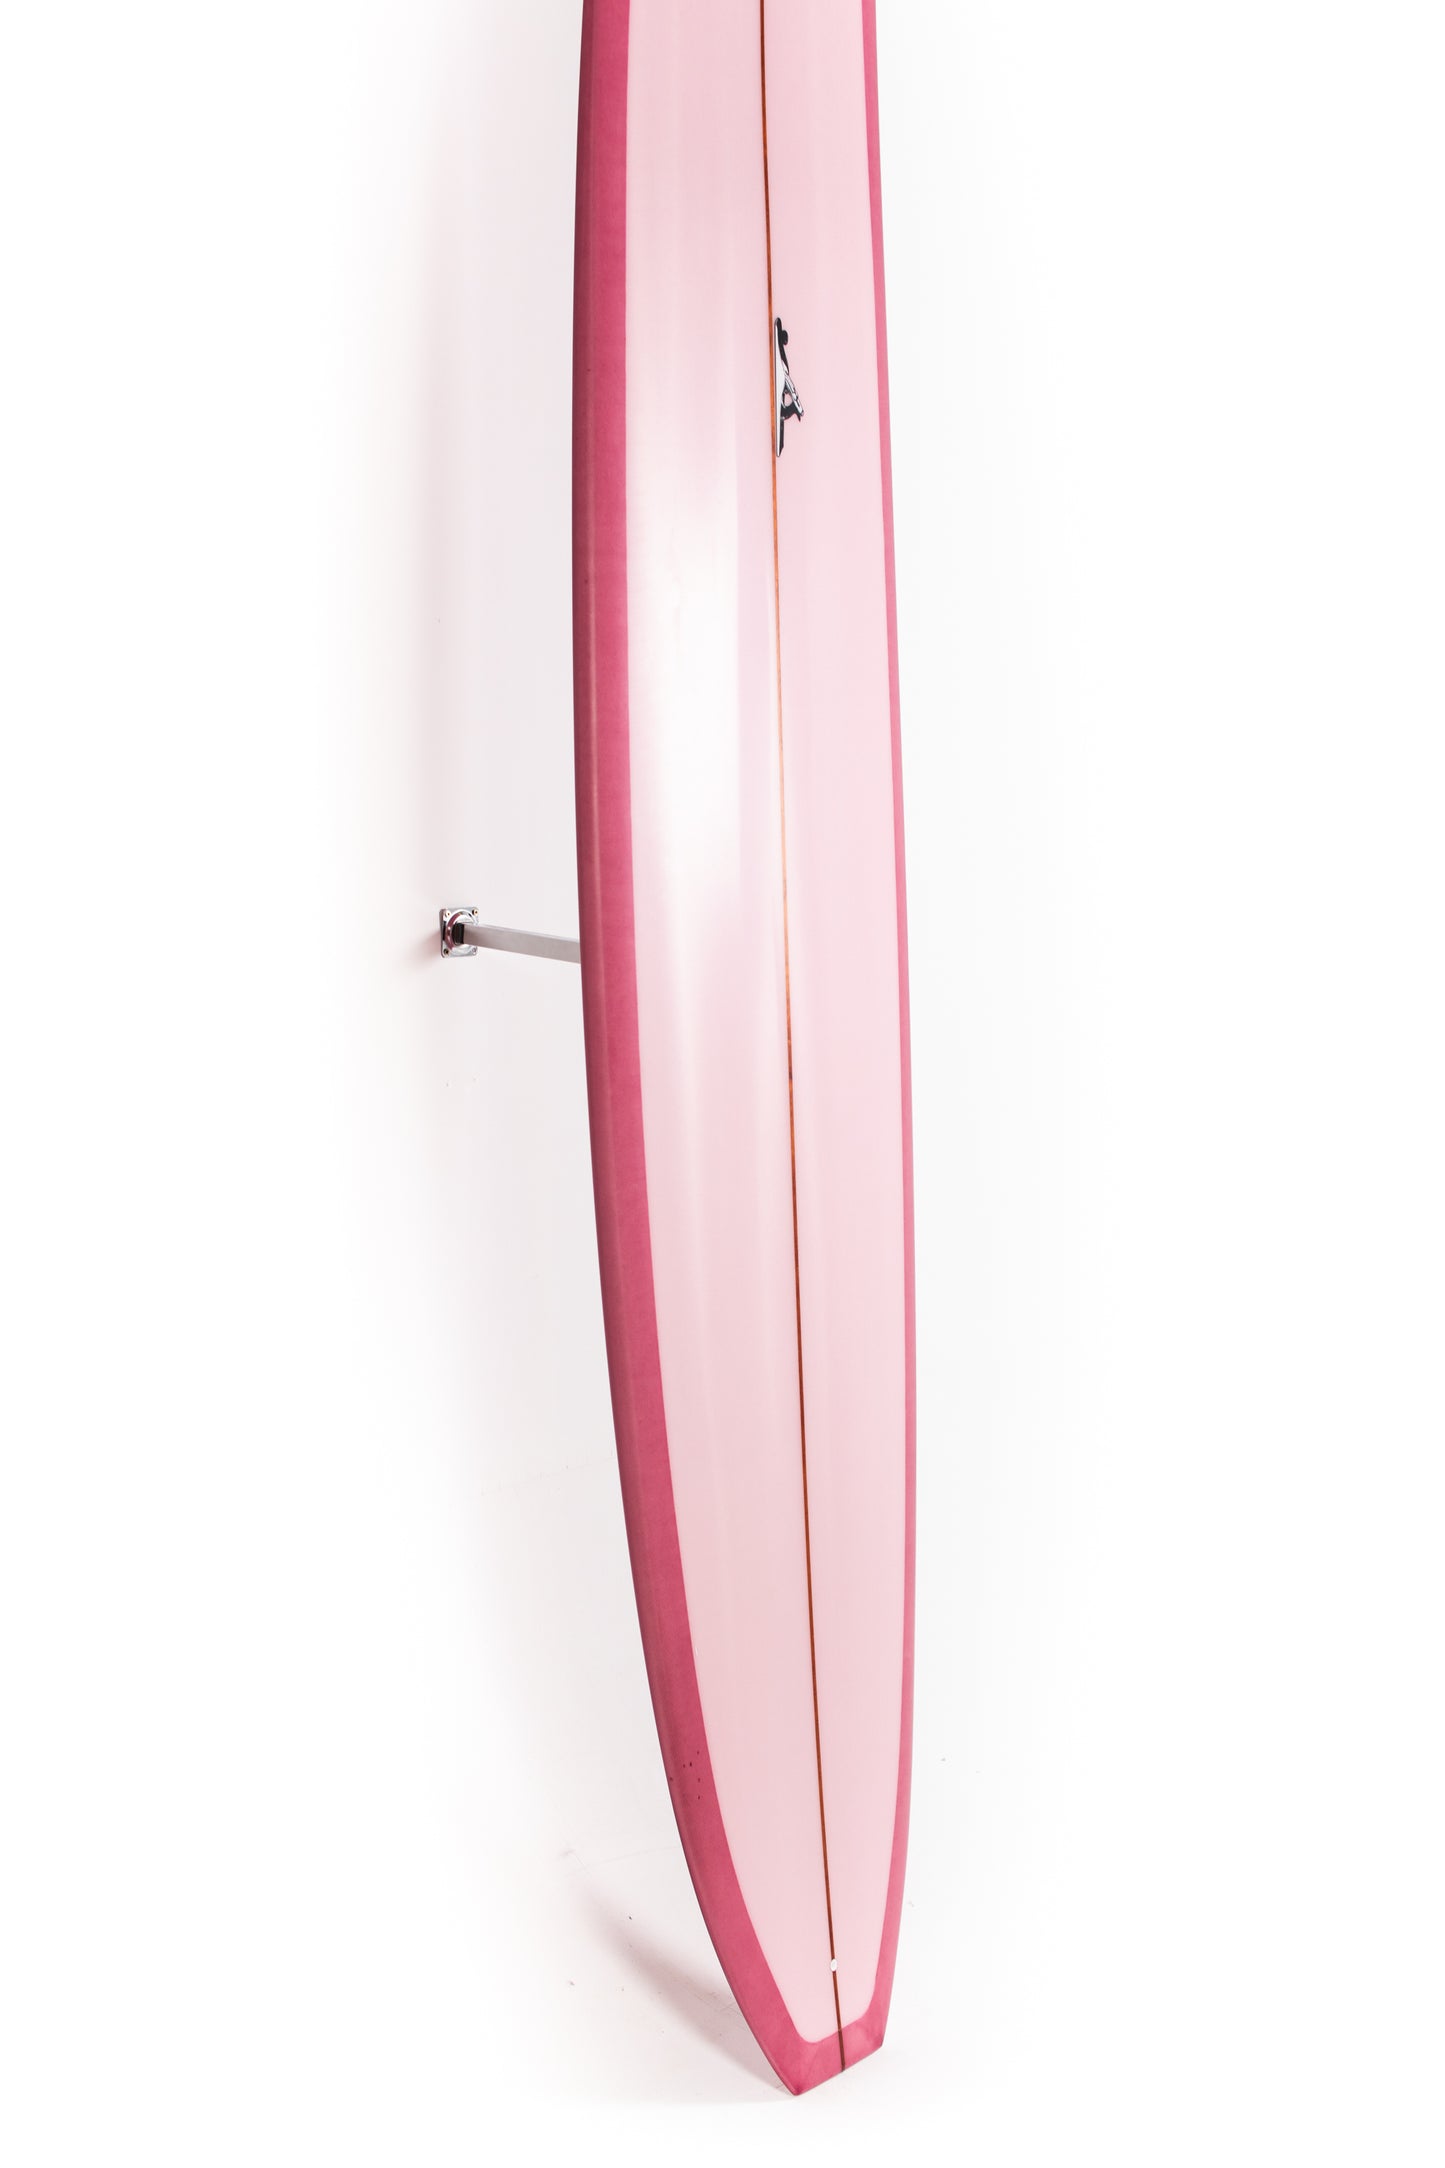 
                  
                    Pukas Surf Shop - Thomas Surfboards - STEP DECK - 9'4"x 22 7/8 x 2 7/8 - STEPDECK94
                  
                